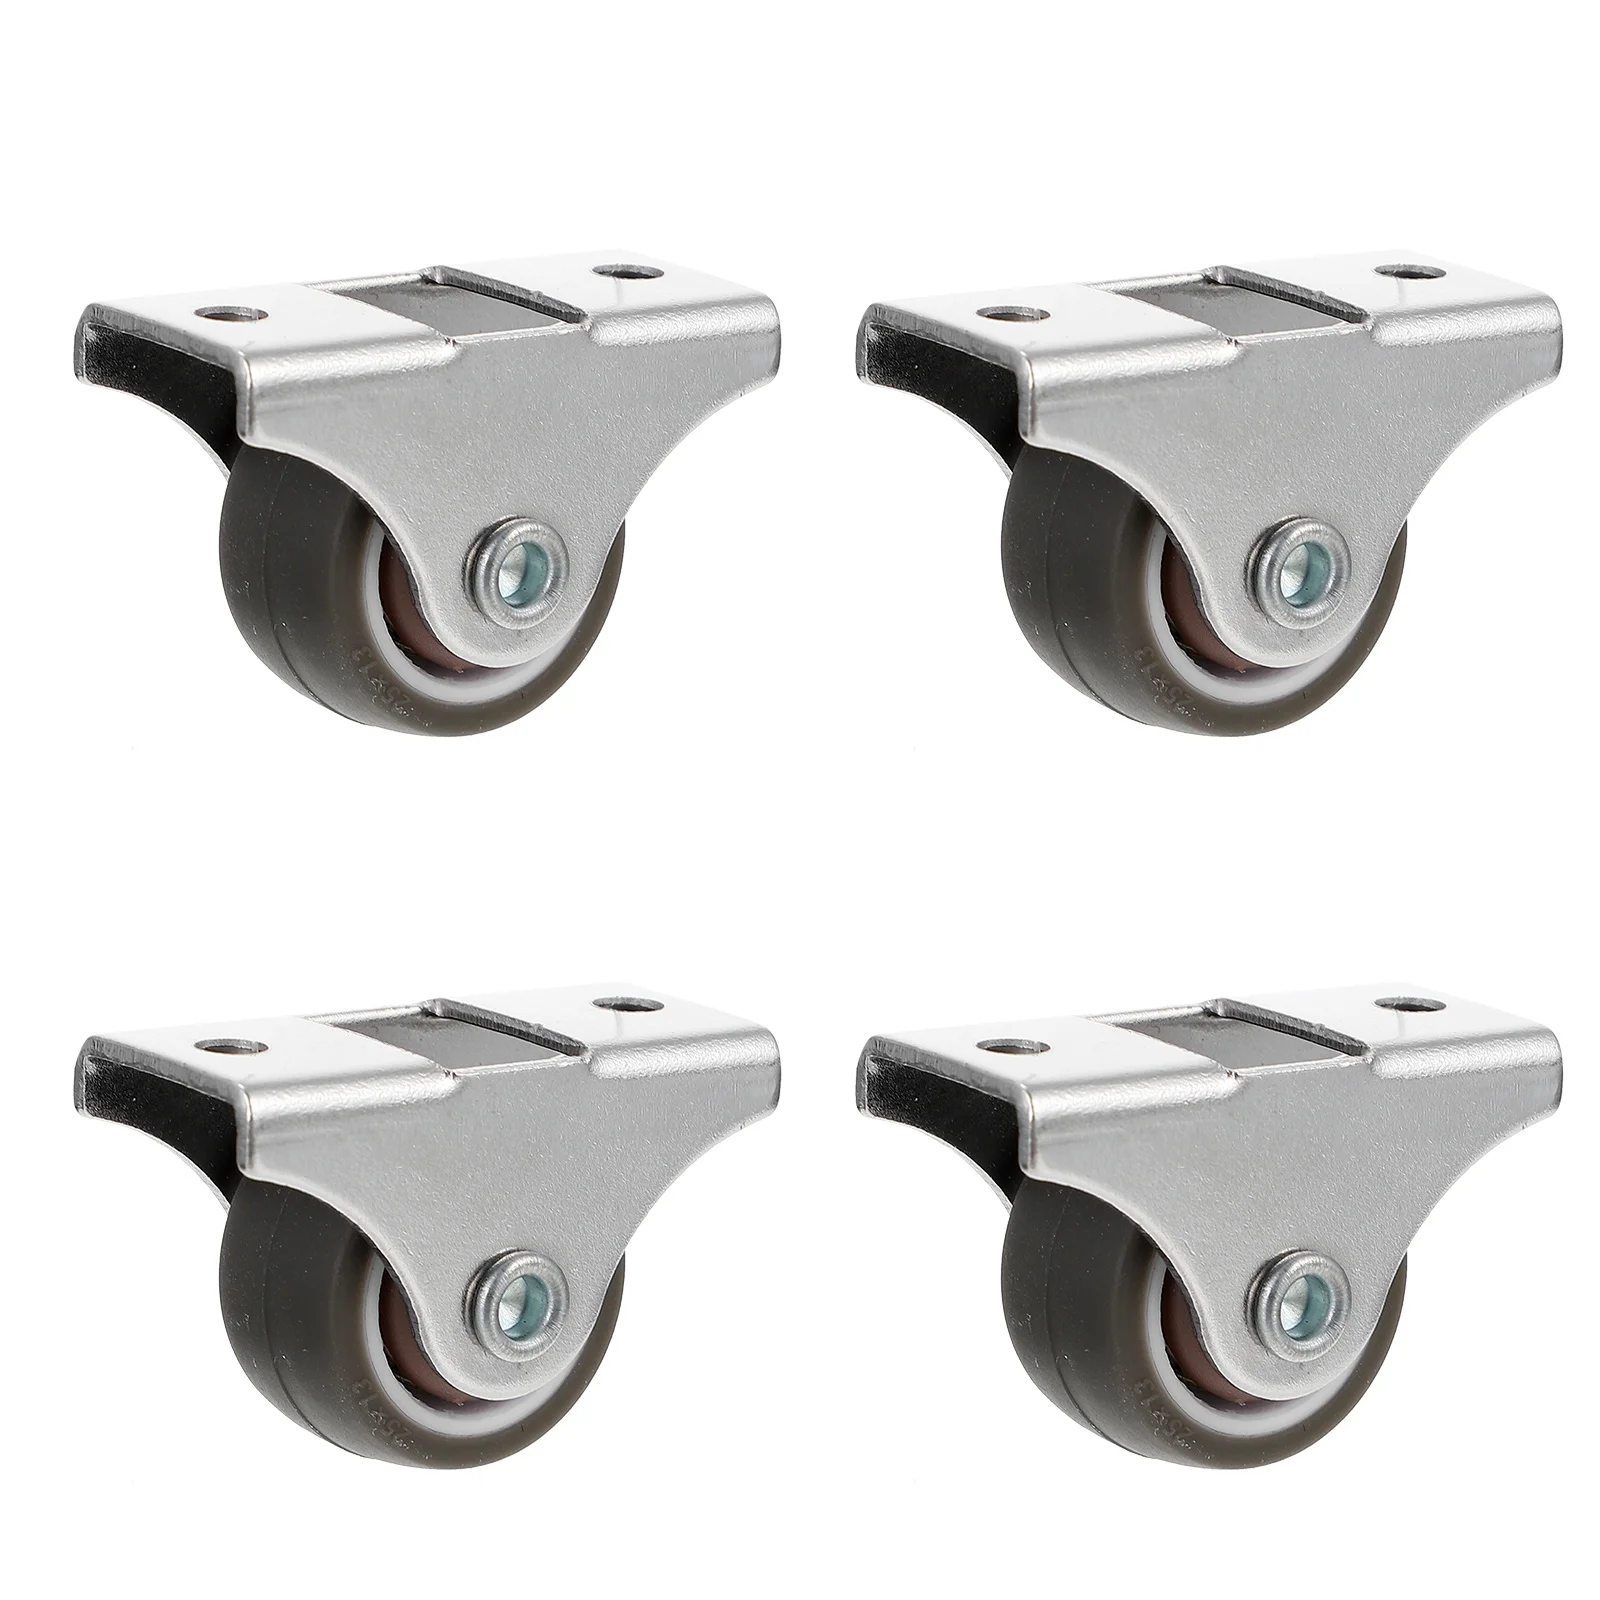 

4 Pcs Roller Orientation Wheel Desk Casters Directional Movable Castor Wheels Table Iron